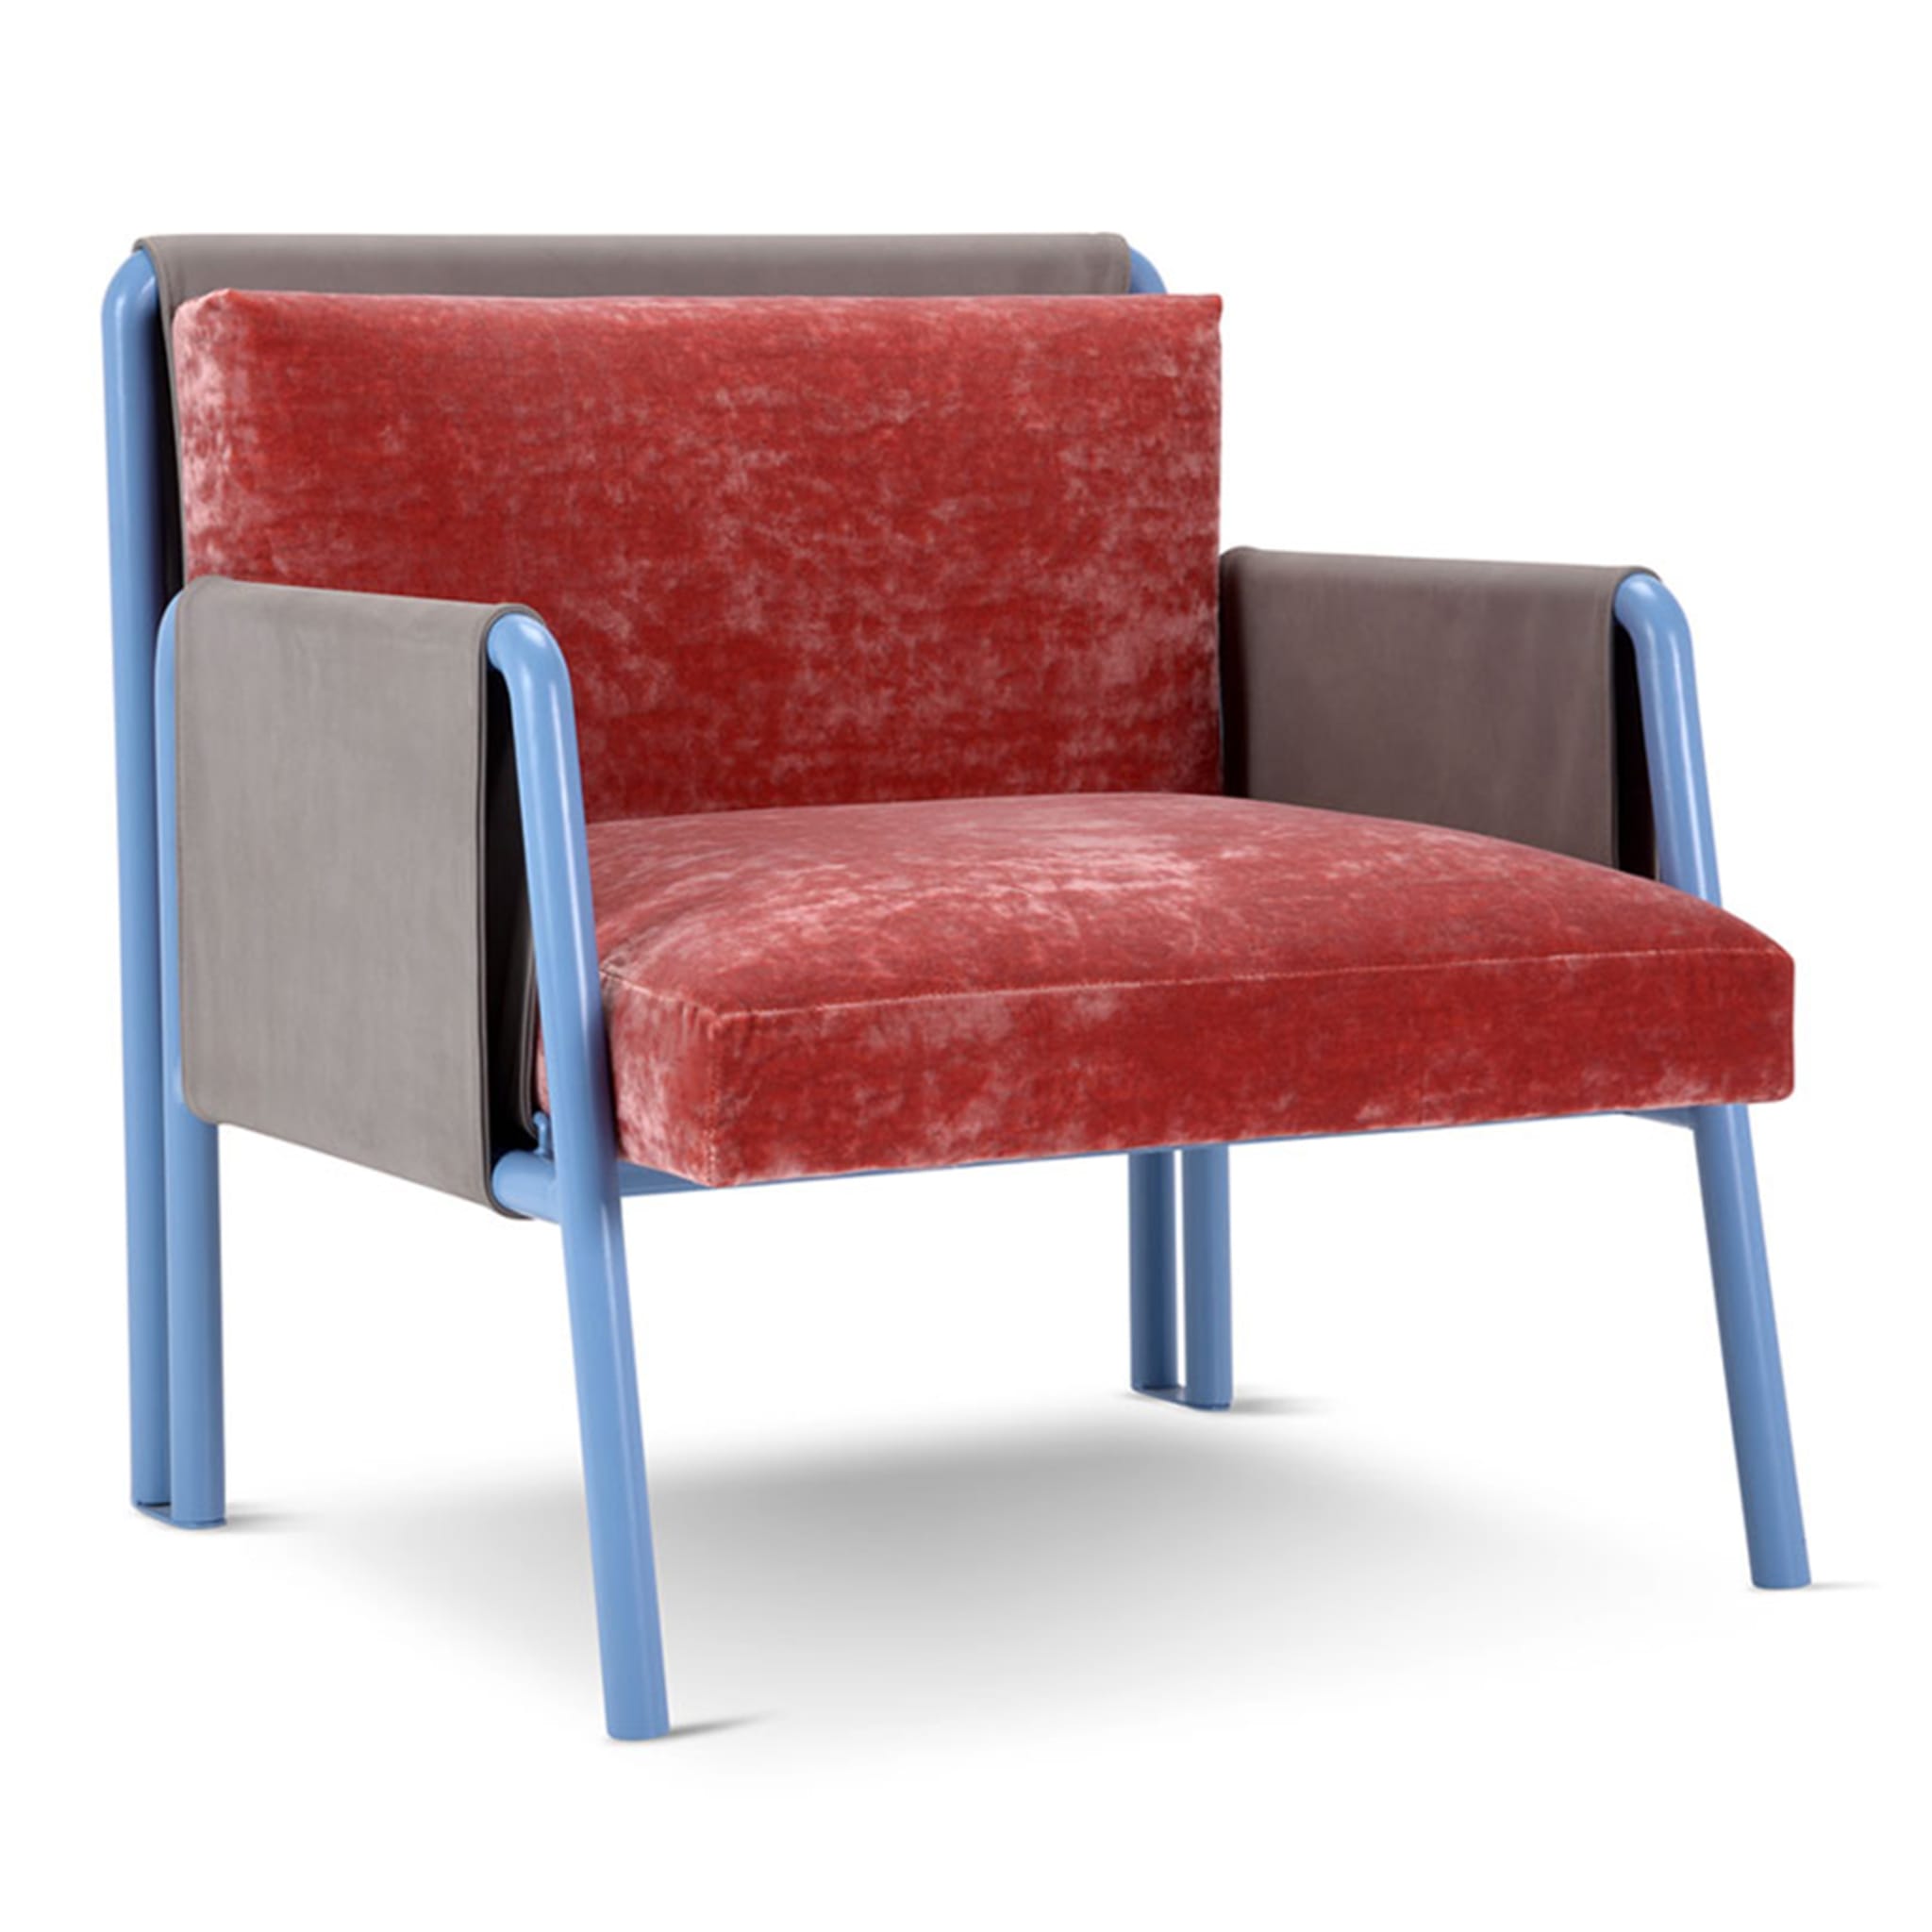 Swing Red Chenille & Azure Armchair by Debonademeo - Alternative view 1